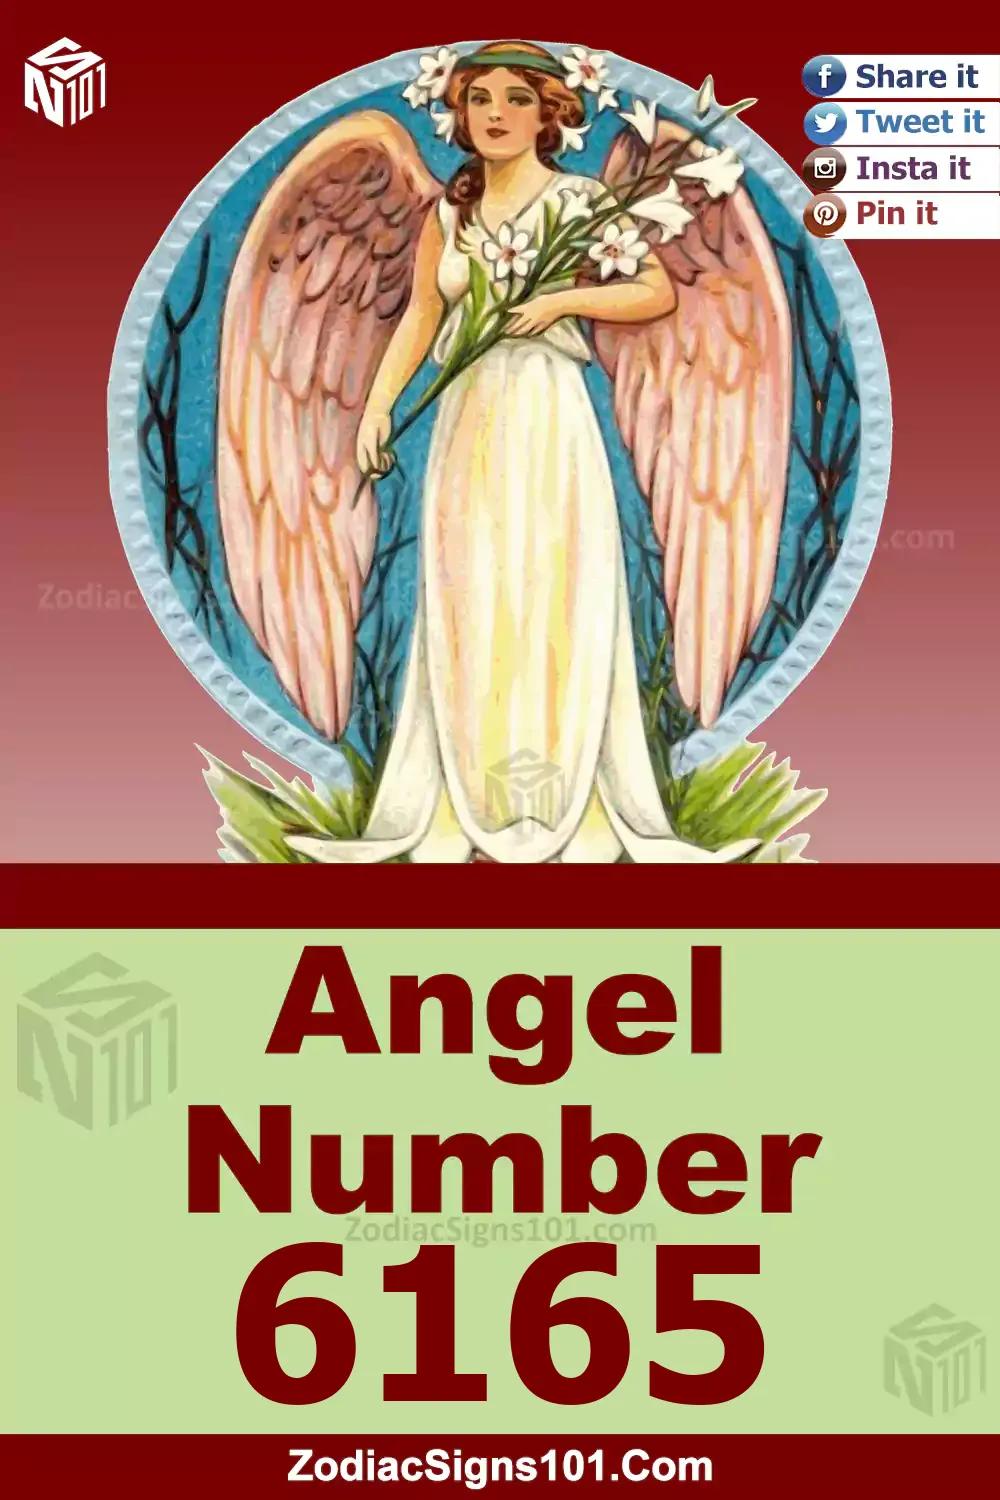 6165-Angel-Number-Meaning.jpg